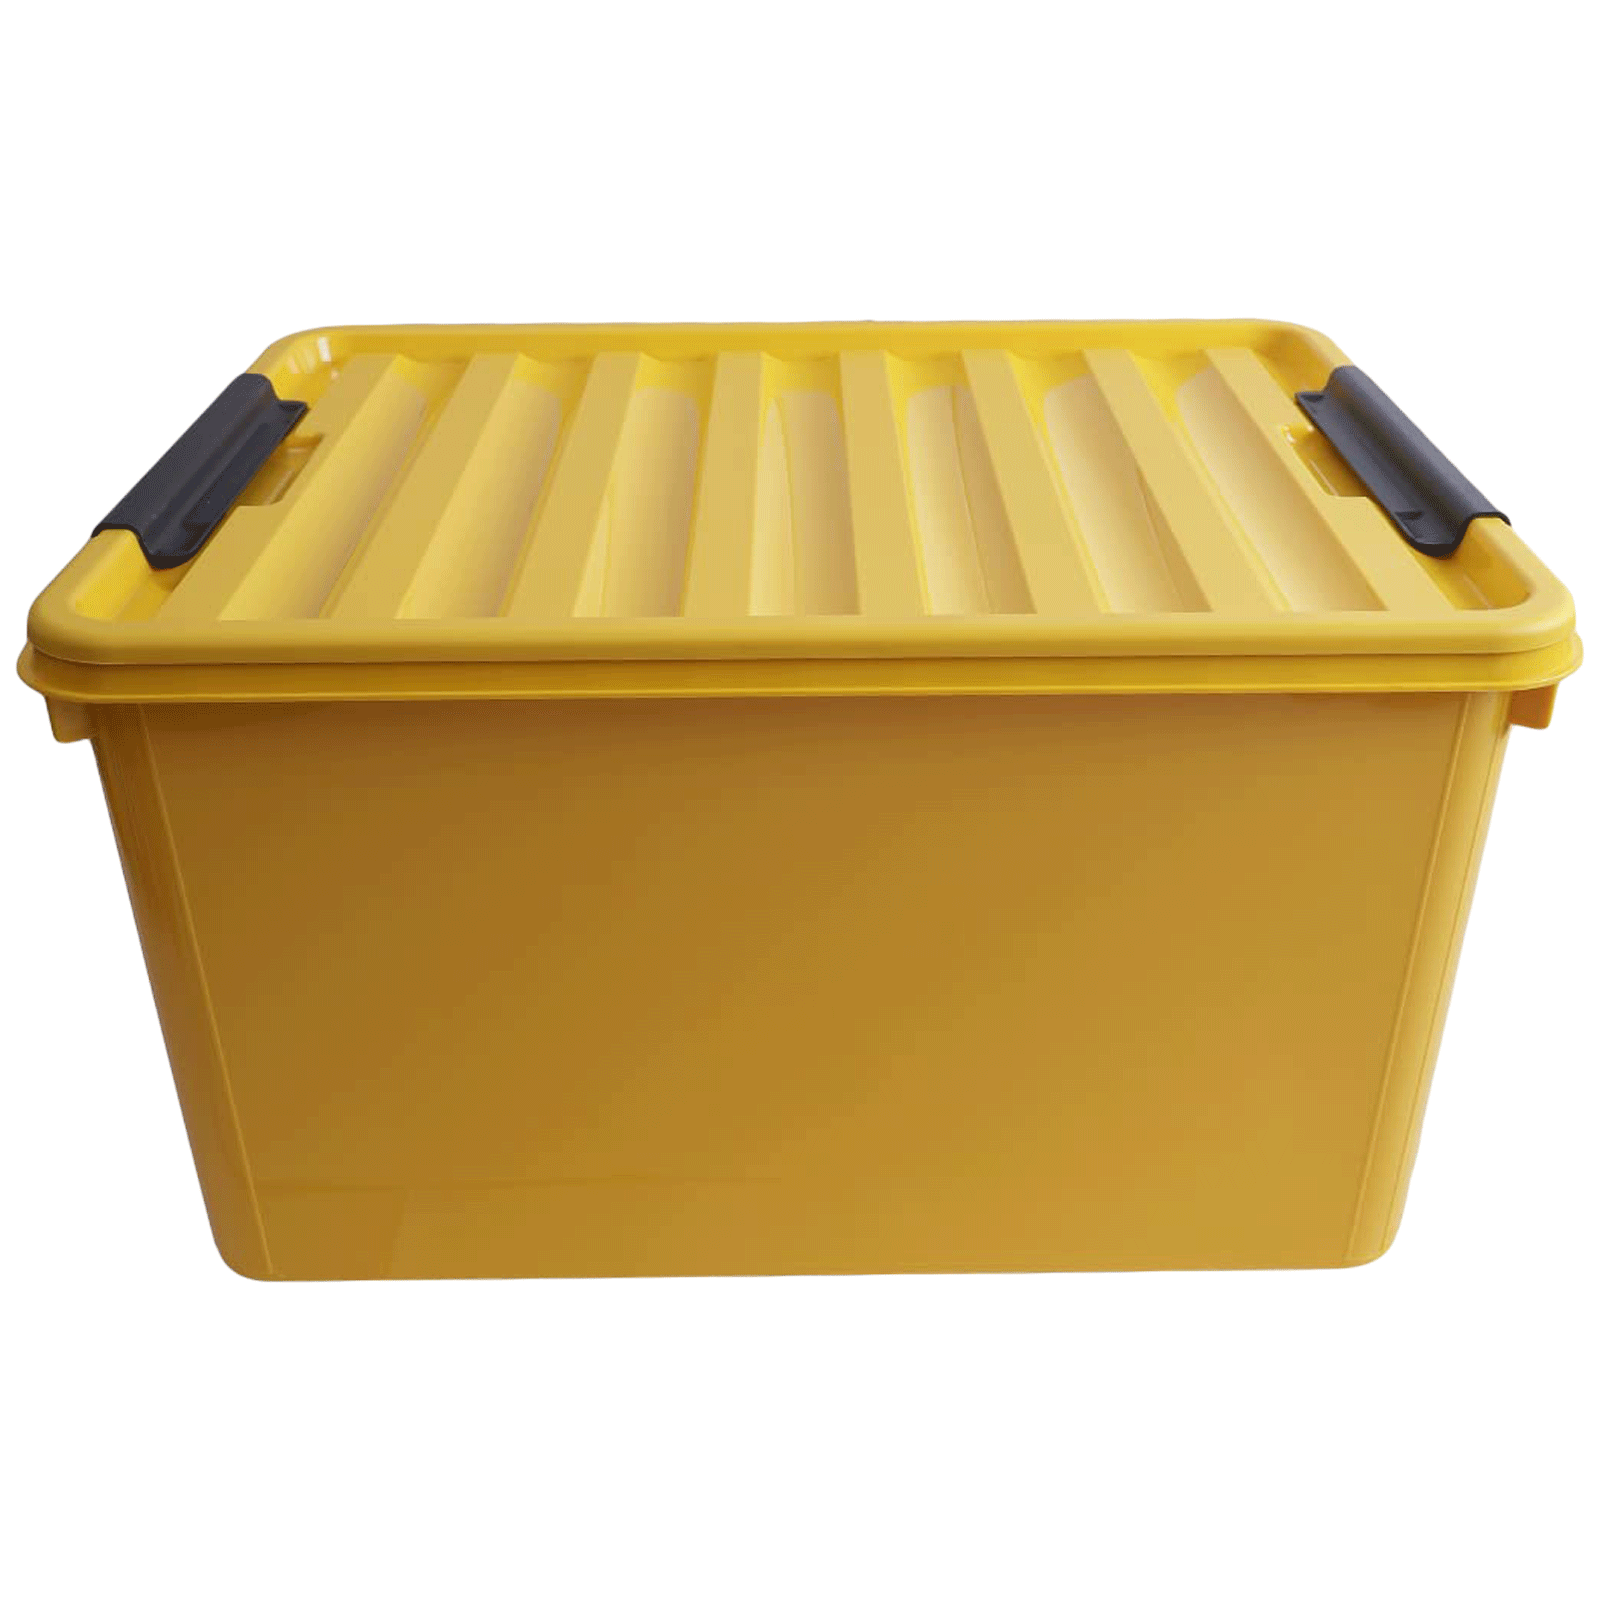 Lock & Lock Inplus 40 Litre Rectangular Plastic Storage Container (Easy Clip, INP114YL, Yellow)_1